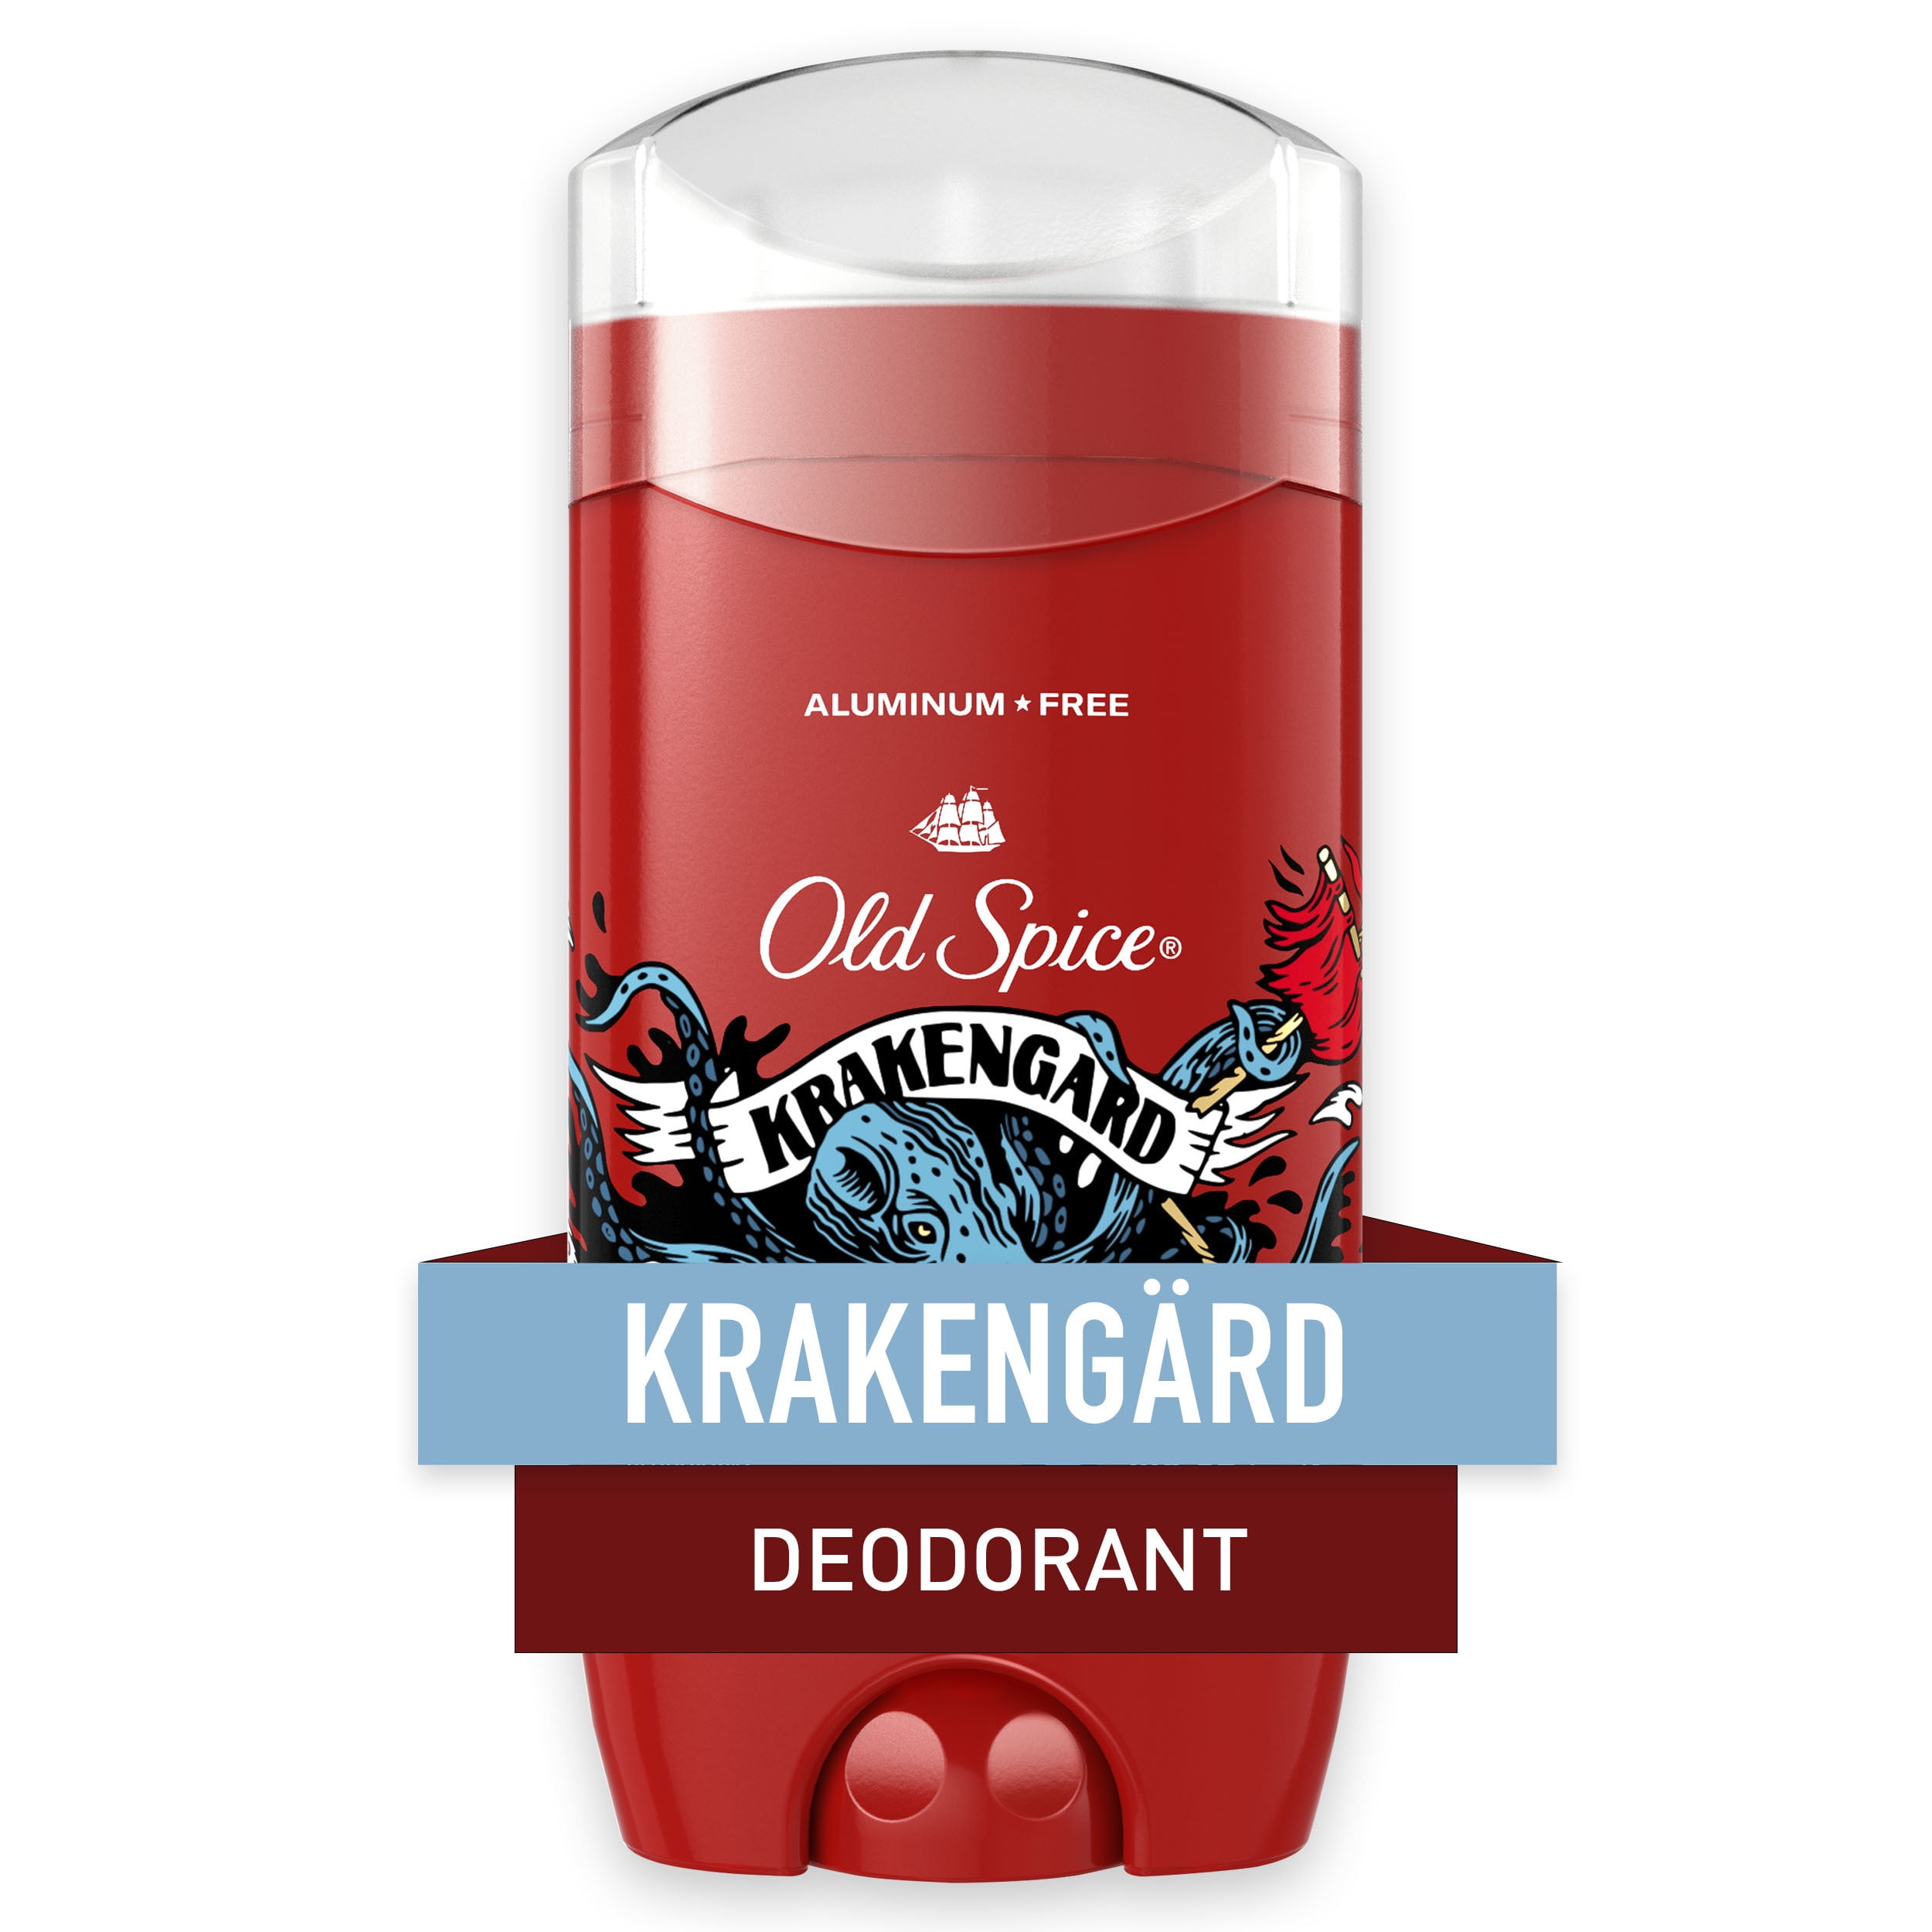 Old Spice Aluminum Free Deodorant for Men, Krakengard, 3 oz